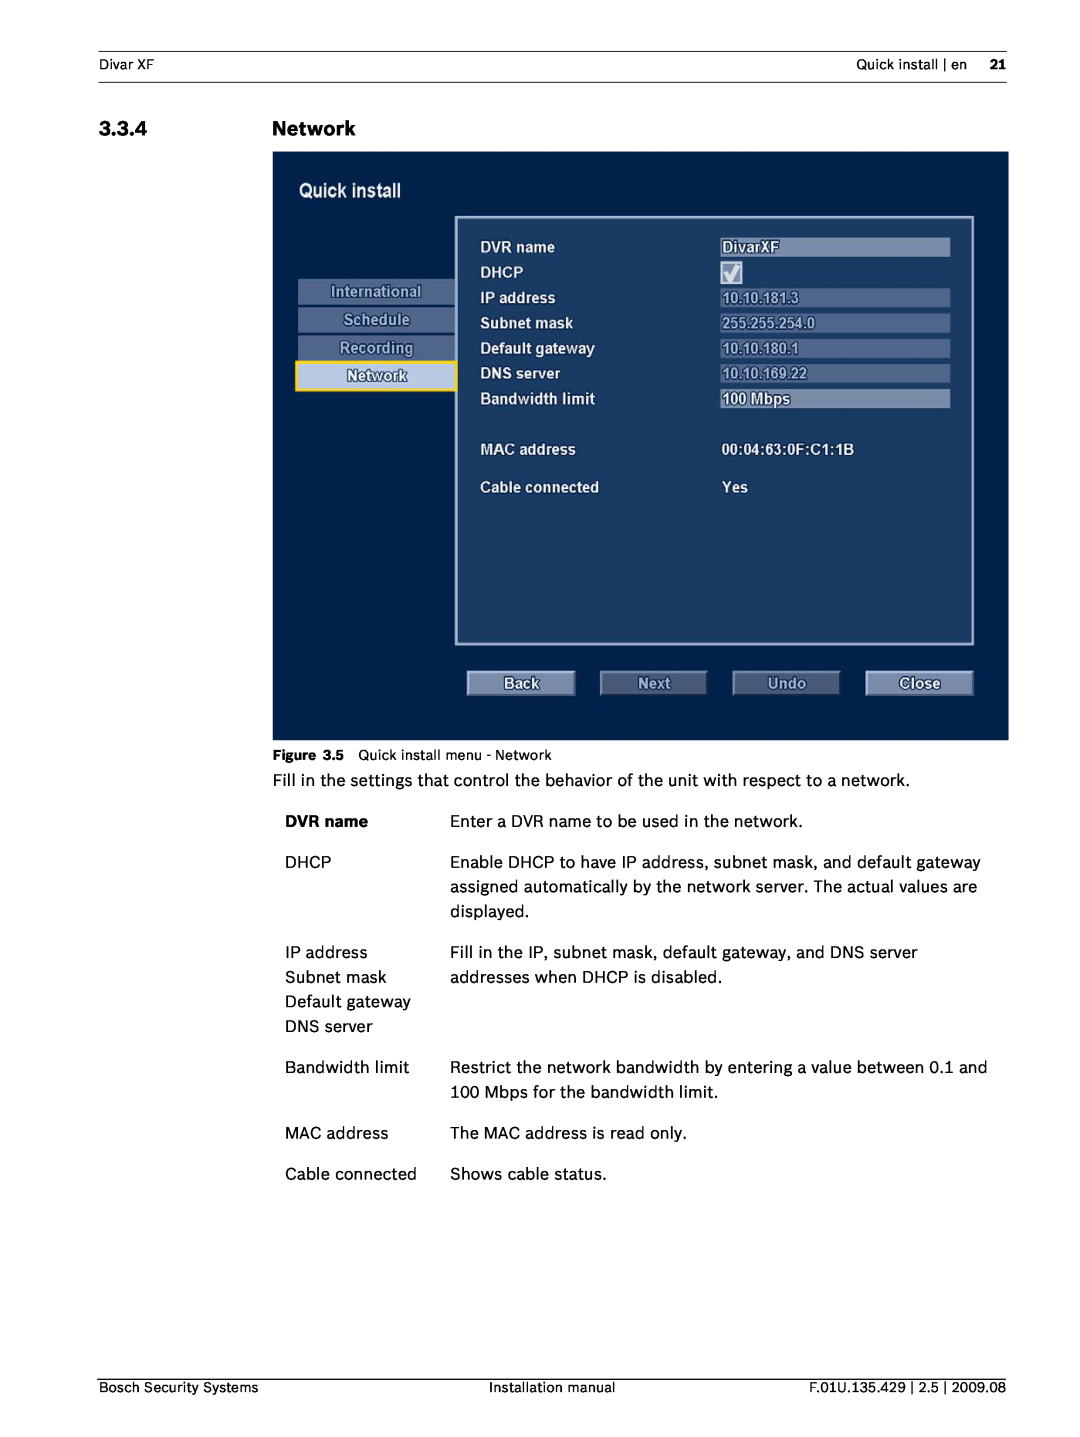 Bosch Appliances XF installation manual 3.3.4Network, DVR name 